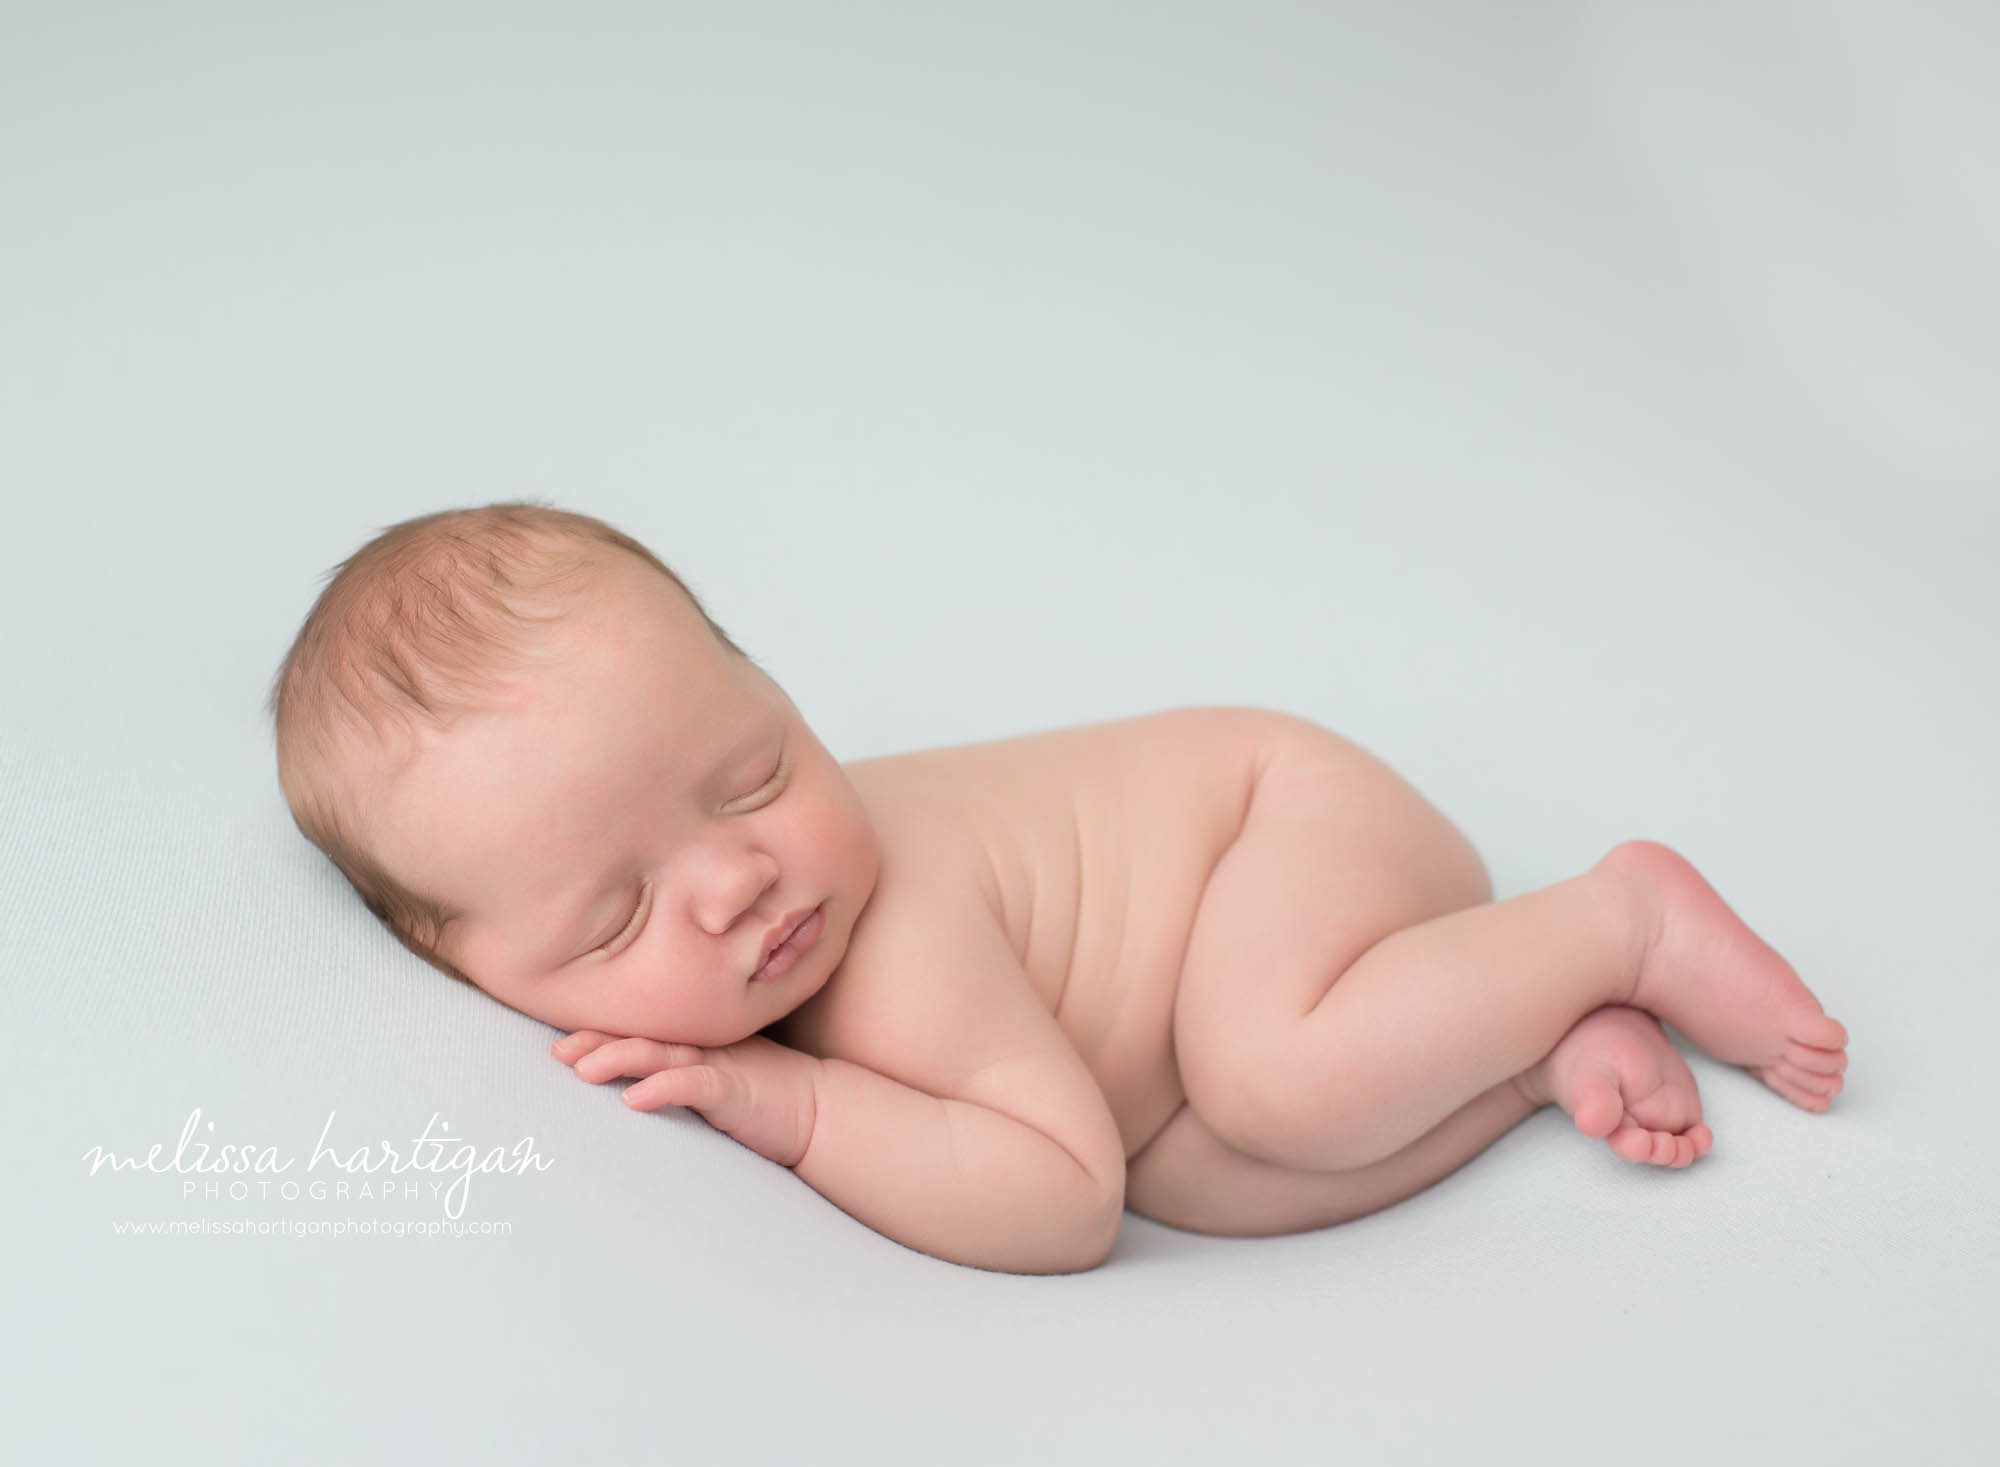 newborn baby boy posed on side sleeping tolldand county CT newborn photography